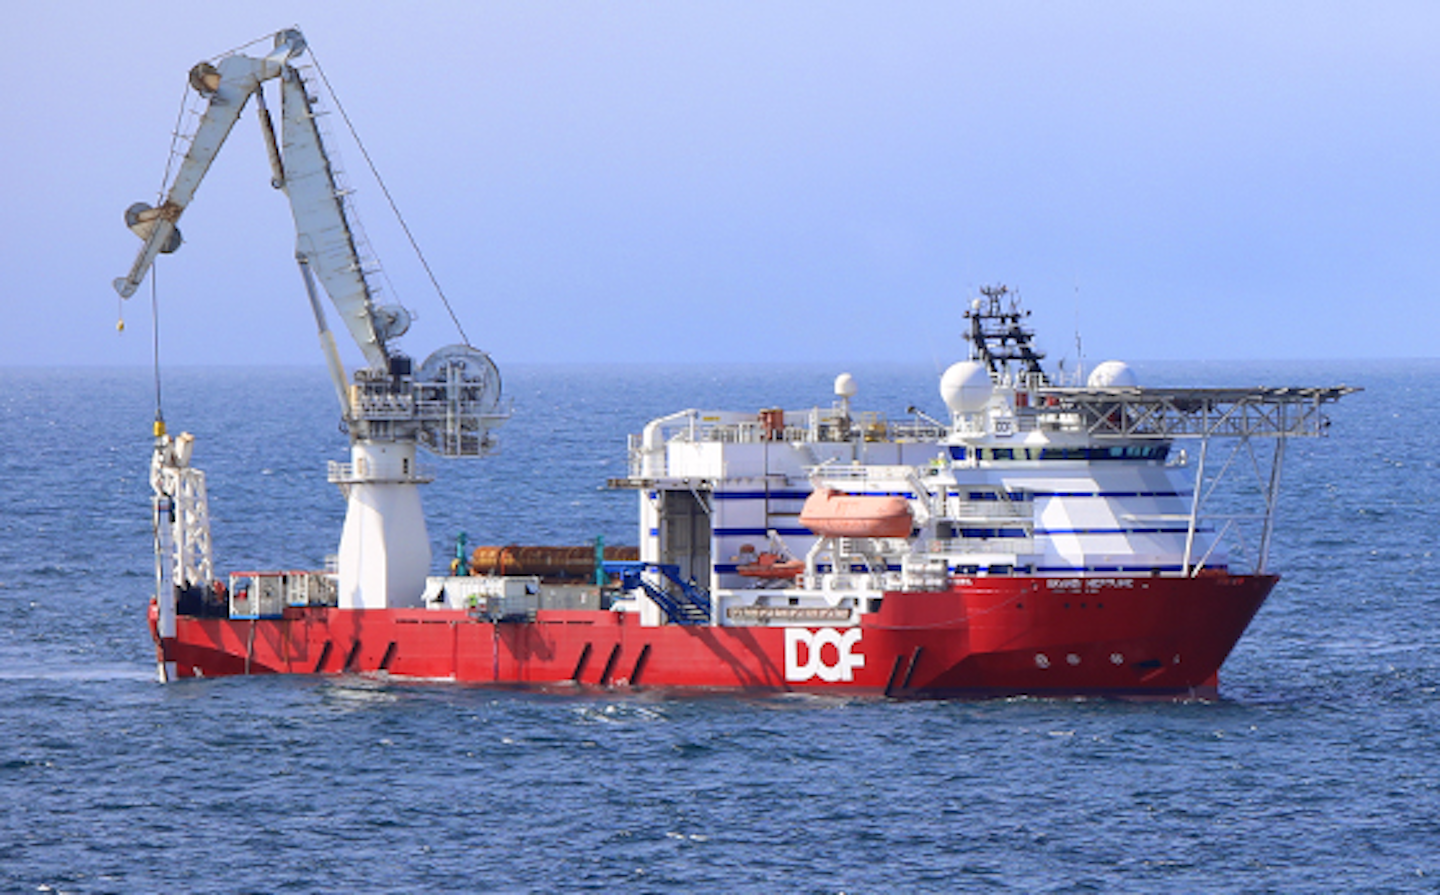 Дали судно. Subsea 7 Skandi Africa. Wintershall платформа. Seismic Survey Vessel. Судно данных Кувейтский флаг.